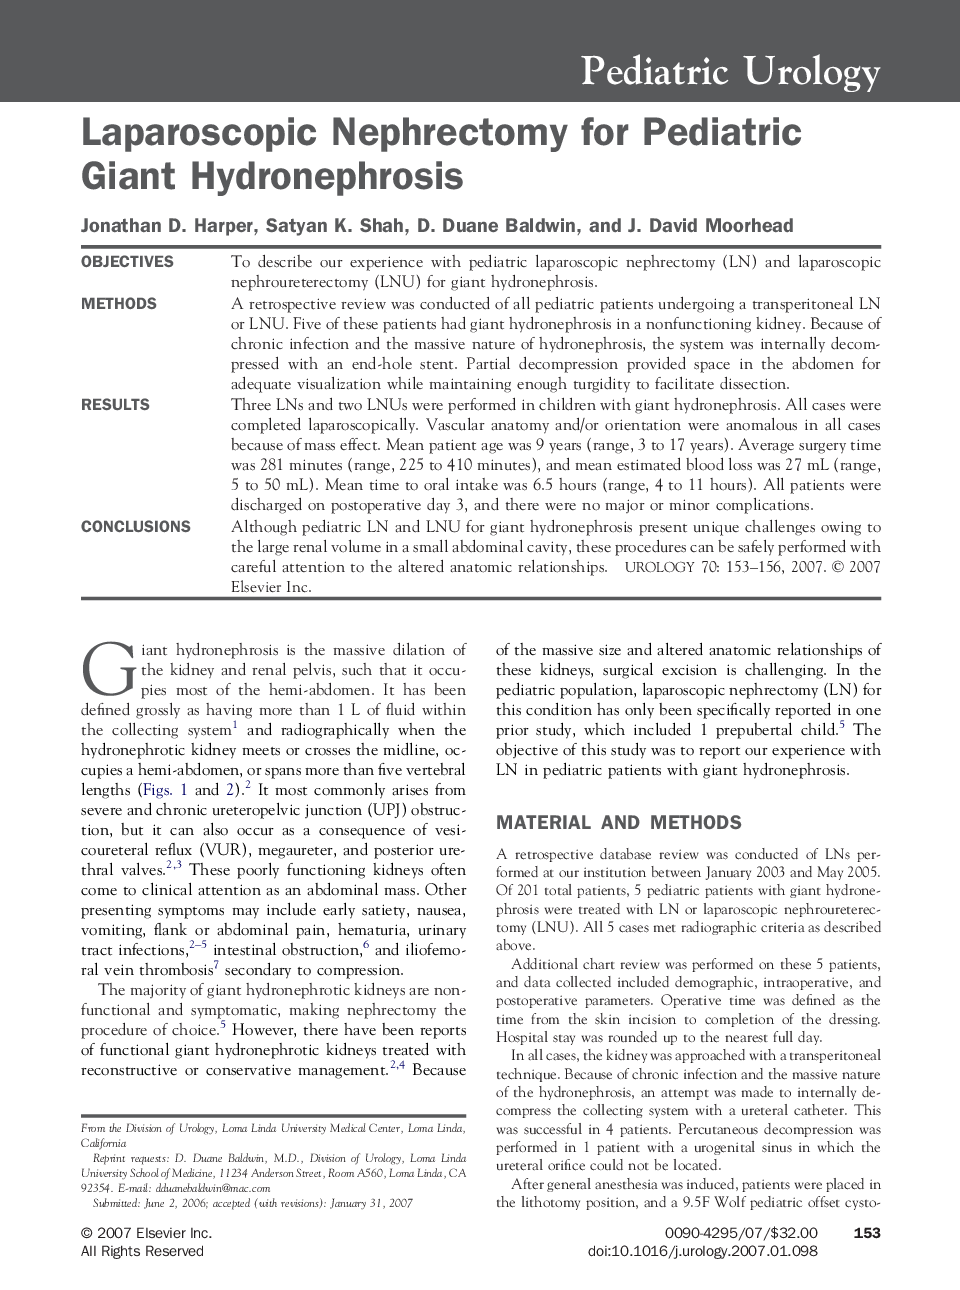 Laparoscopic Nephrectomy for Pediatric Giant Hydronephrosis